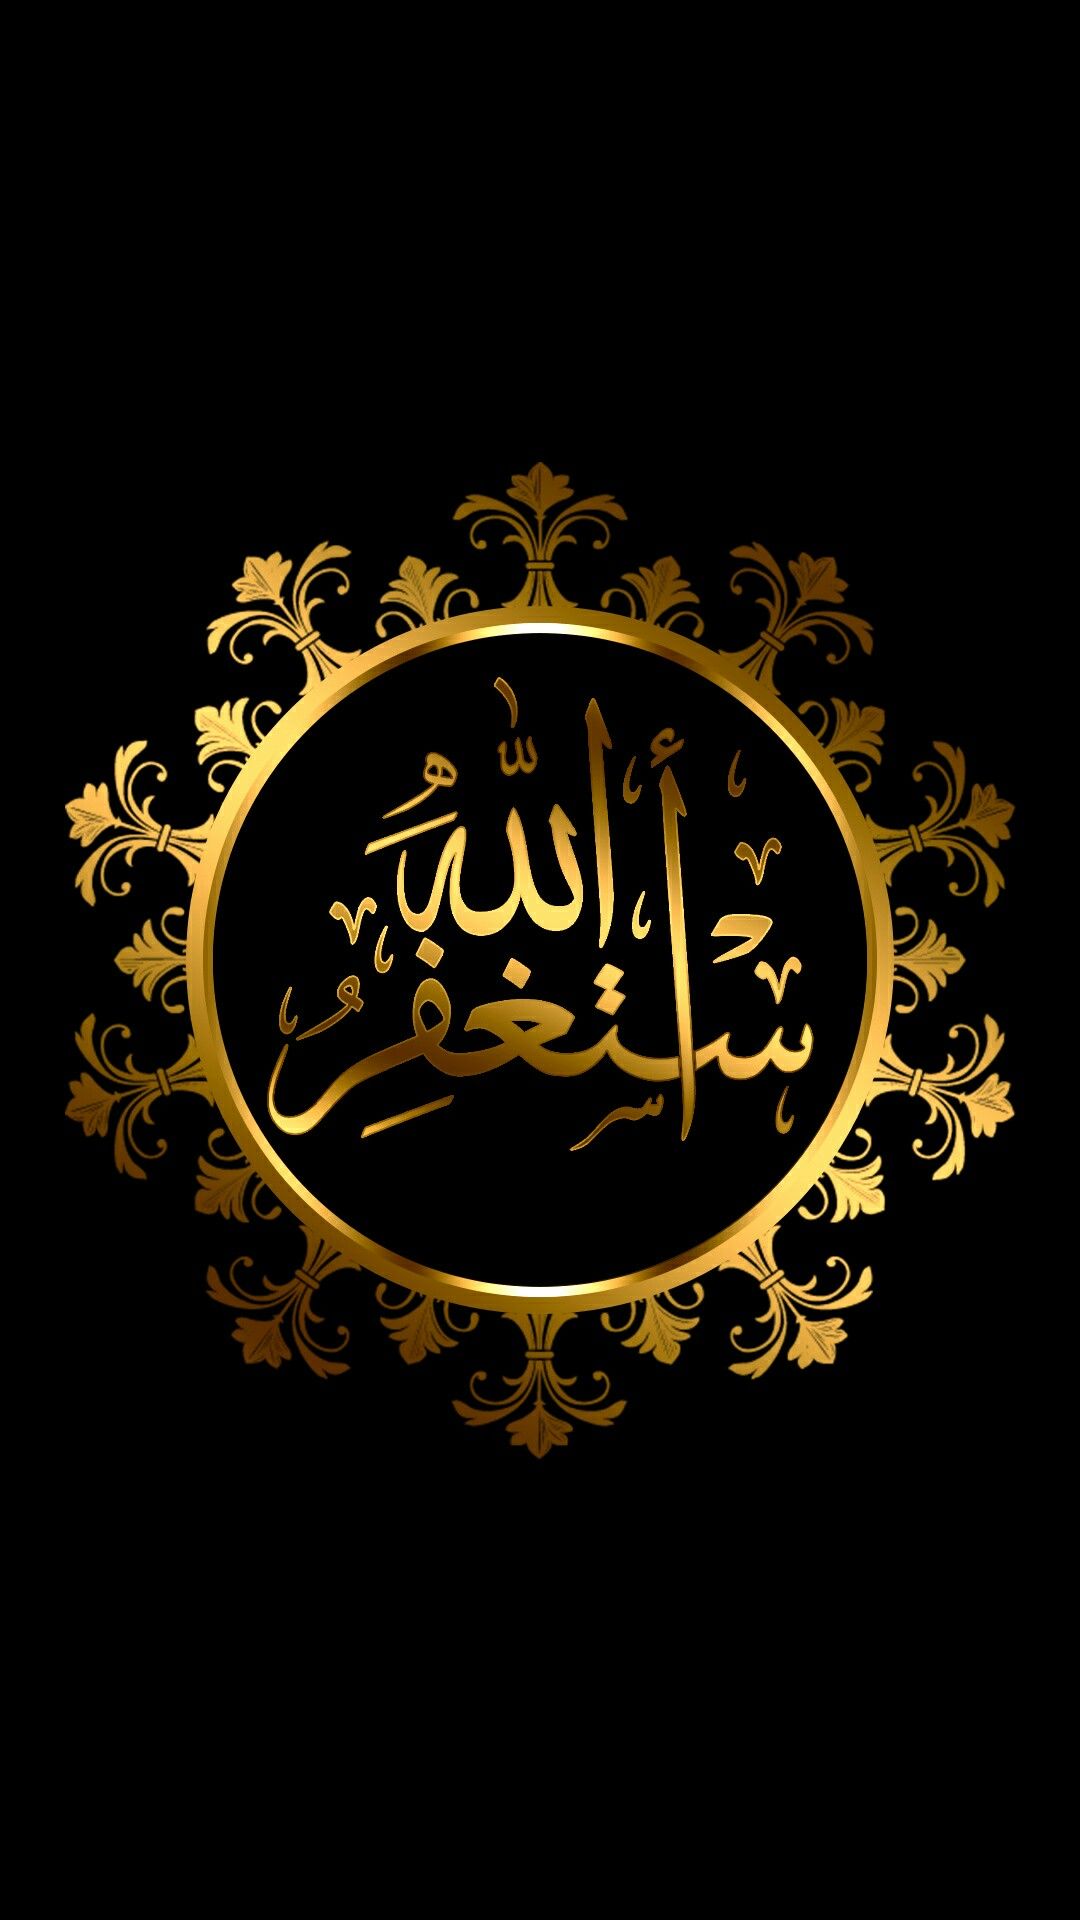 Allah. Islamic wallpaper iphone, Allah wallpaper, Islamic wallpaper